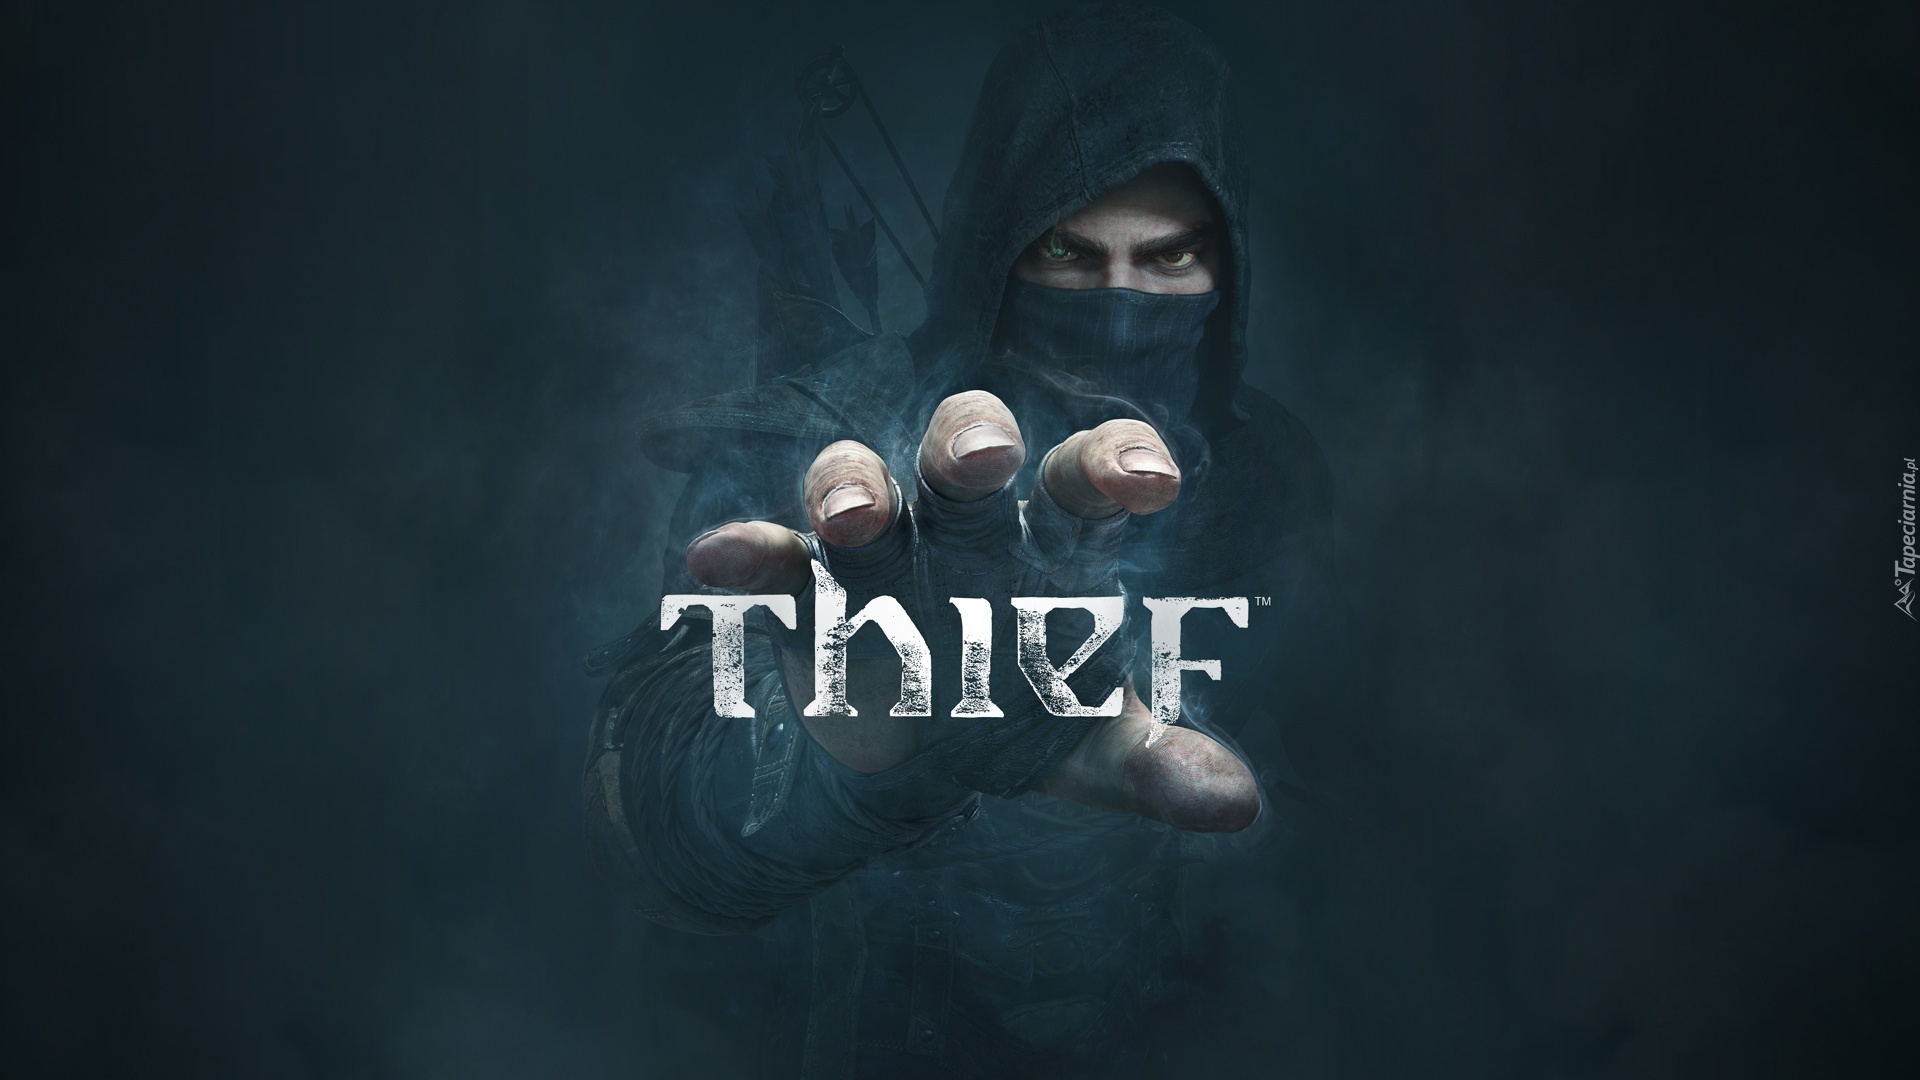 Thief, Garret, Logo